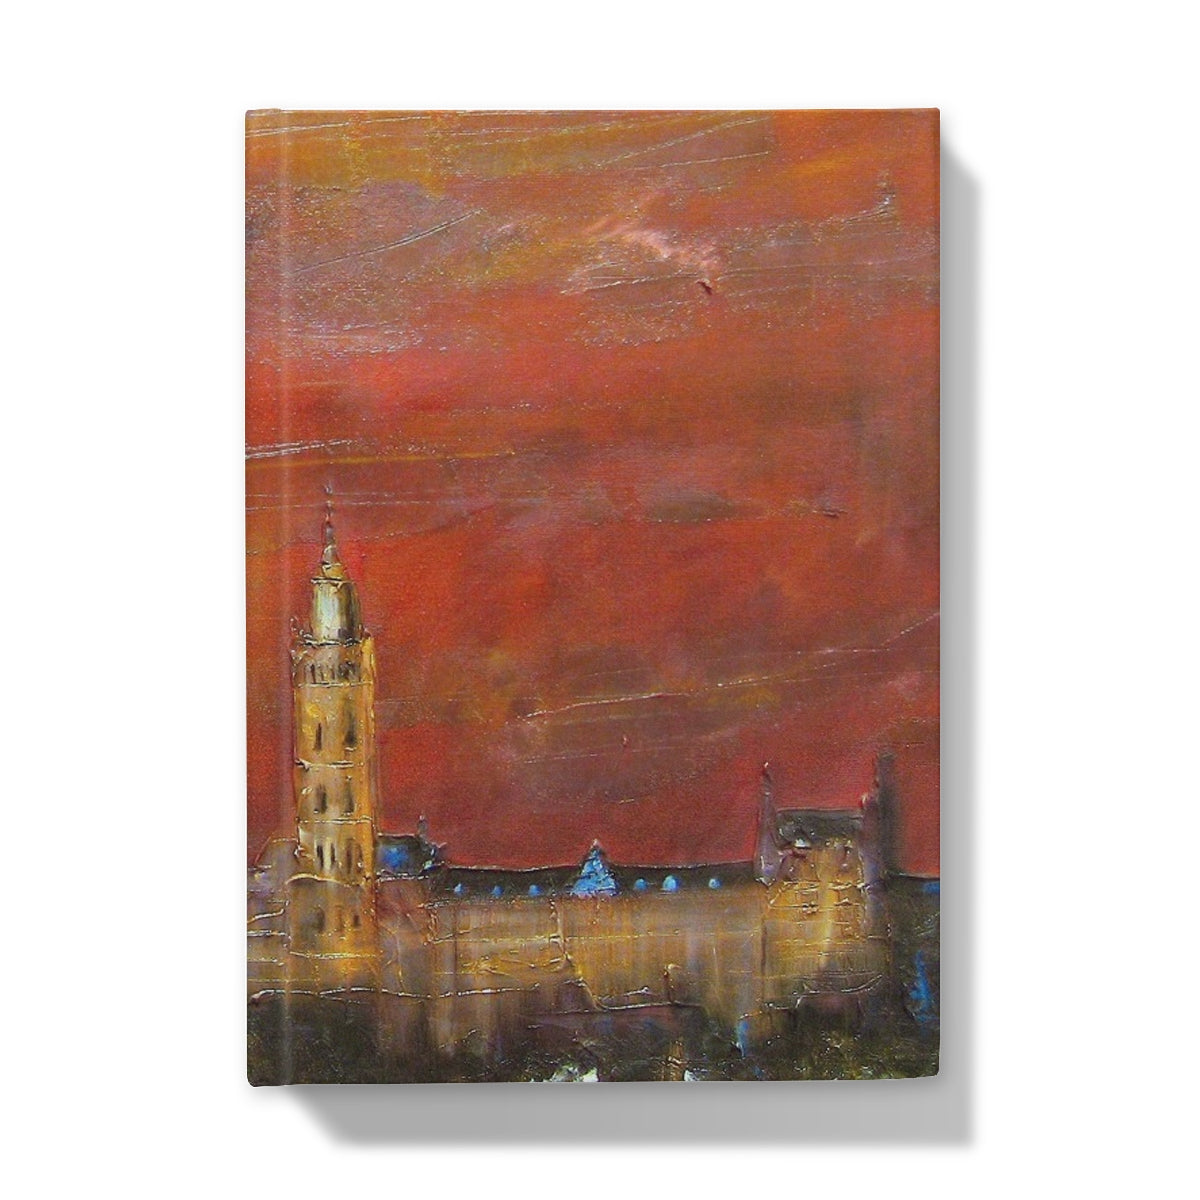 Glasgow University Dusk Art Gifts Hardback Journal-Journals & Notebooks-Edinburgh & Glasgow Art Gallery-5"x7"-Lined-Paintings, Prints, Homeware, Art Gifts From Scotland By Scottish Artist Kevin Hunter